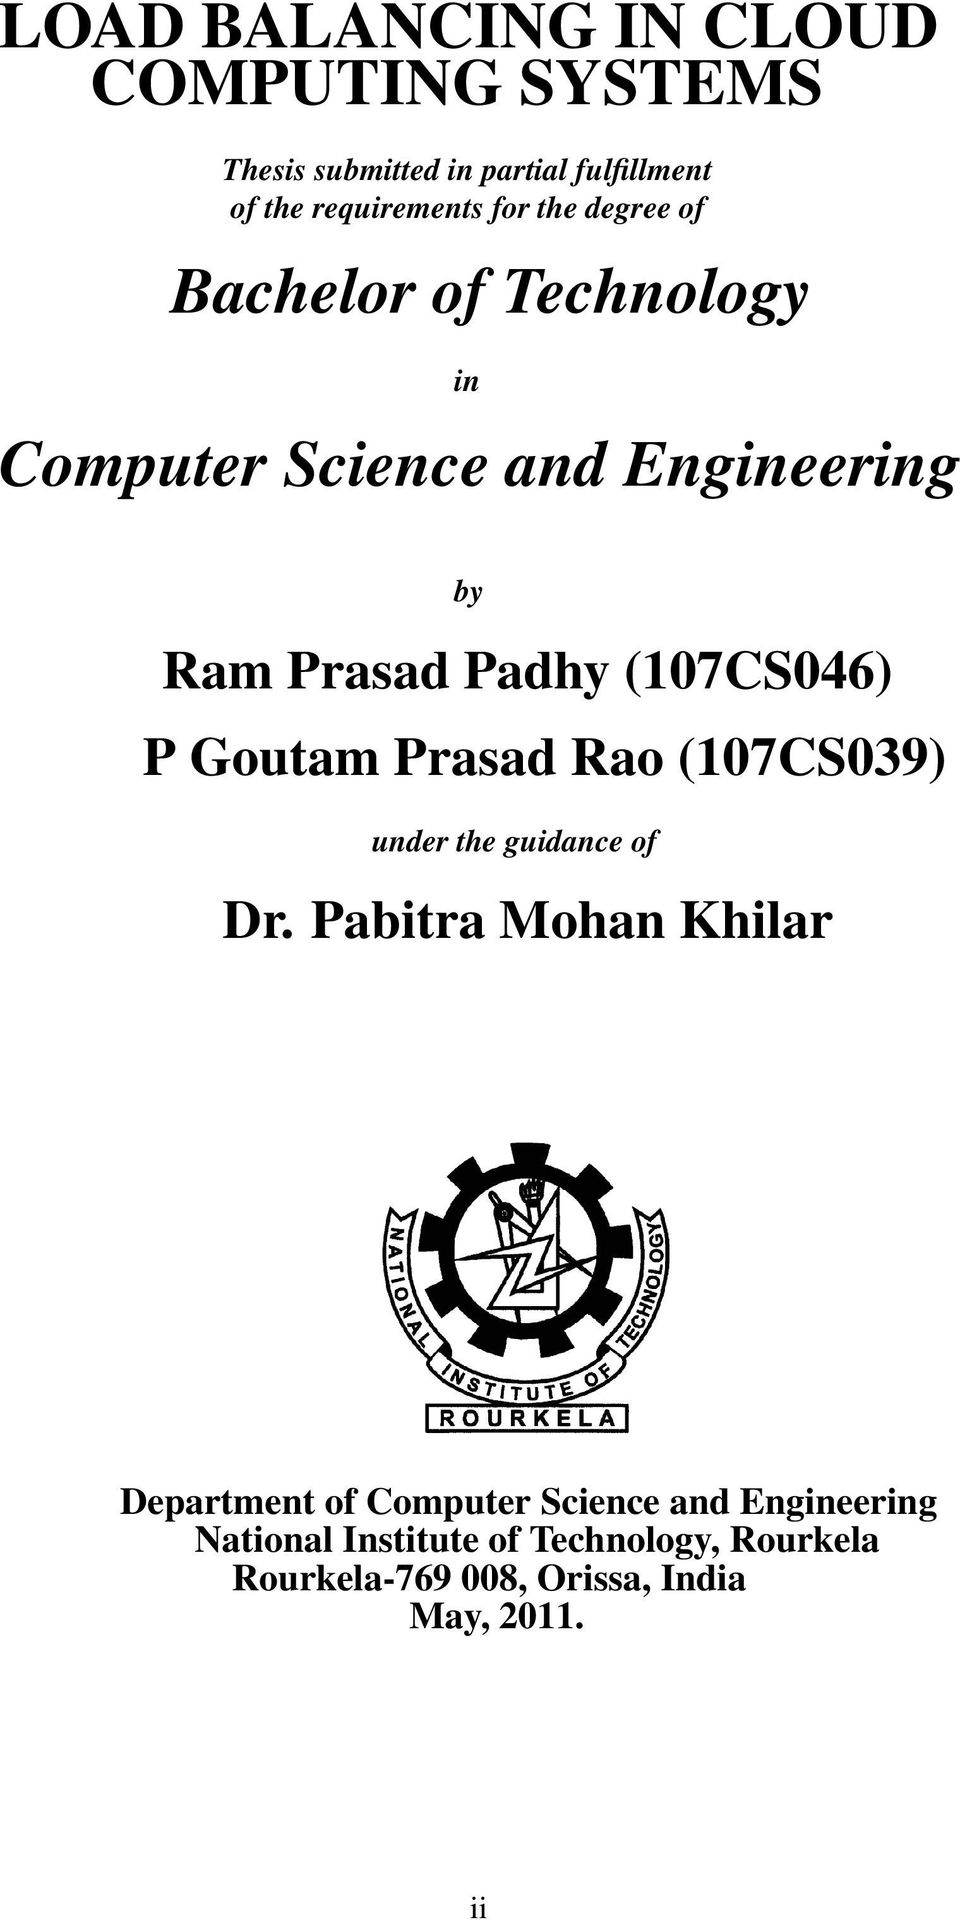 Goutam Prasad Rao (107CS039) under the guidance of Dr.